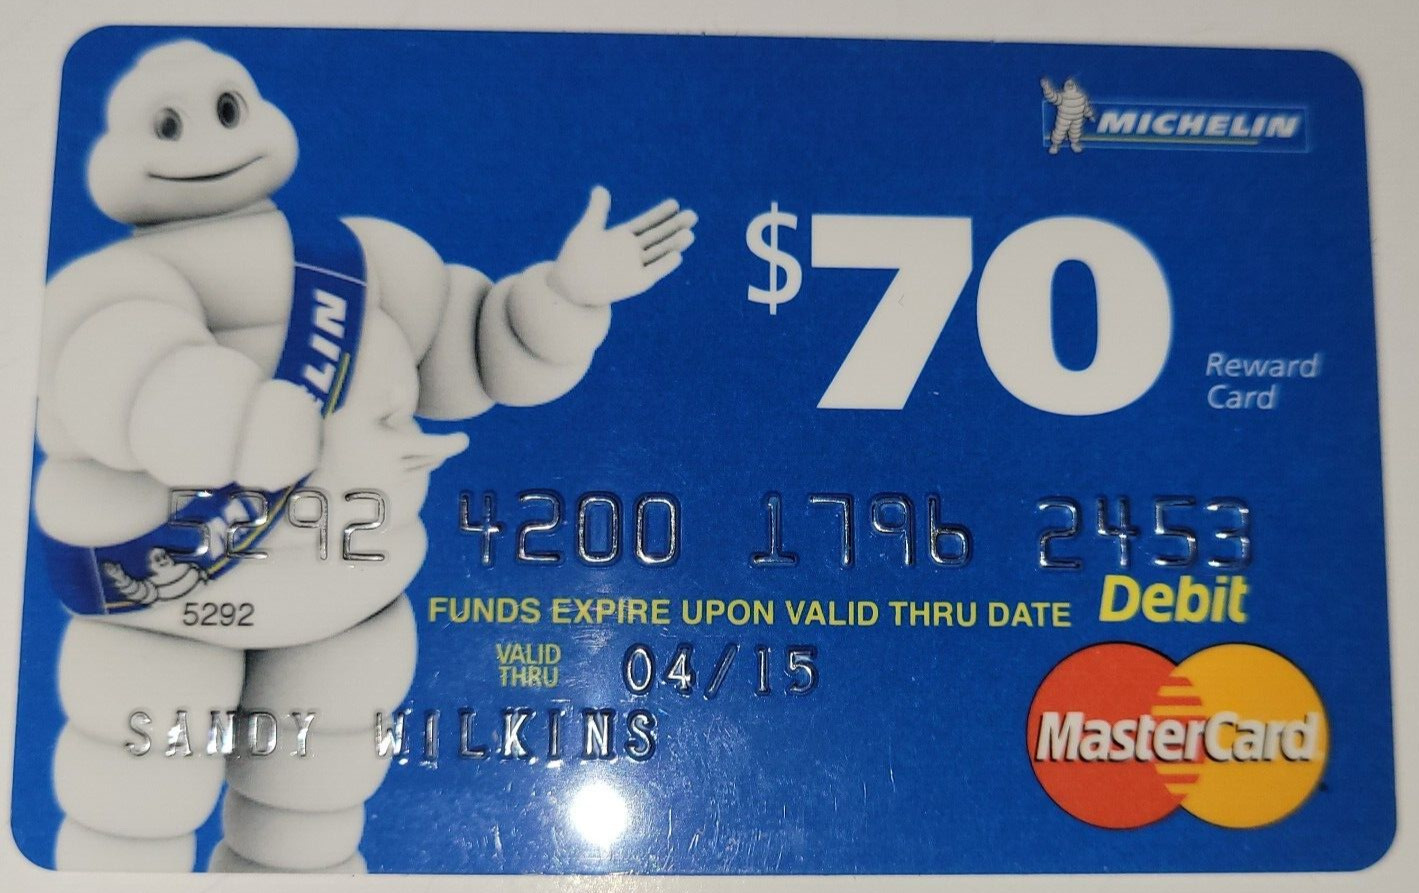 Michelin Tire Man Mastercard Collectible $70 Reward Card Expired